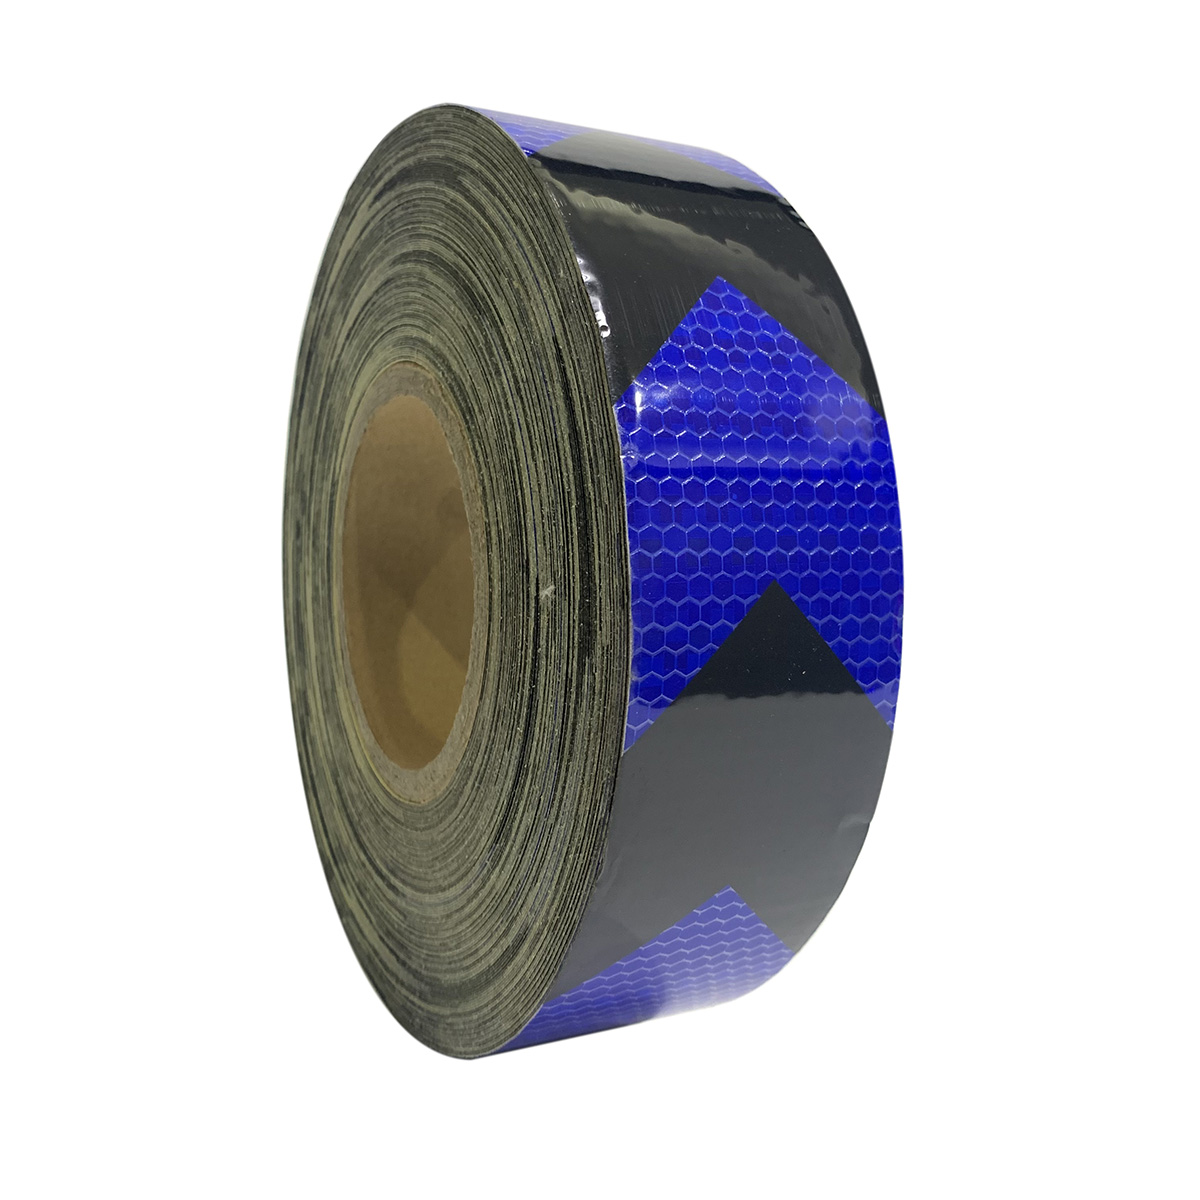 5cm*45m Black and Blue PVC Honeycomb Arrow Reflective Tape